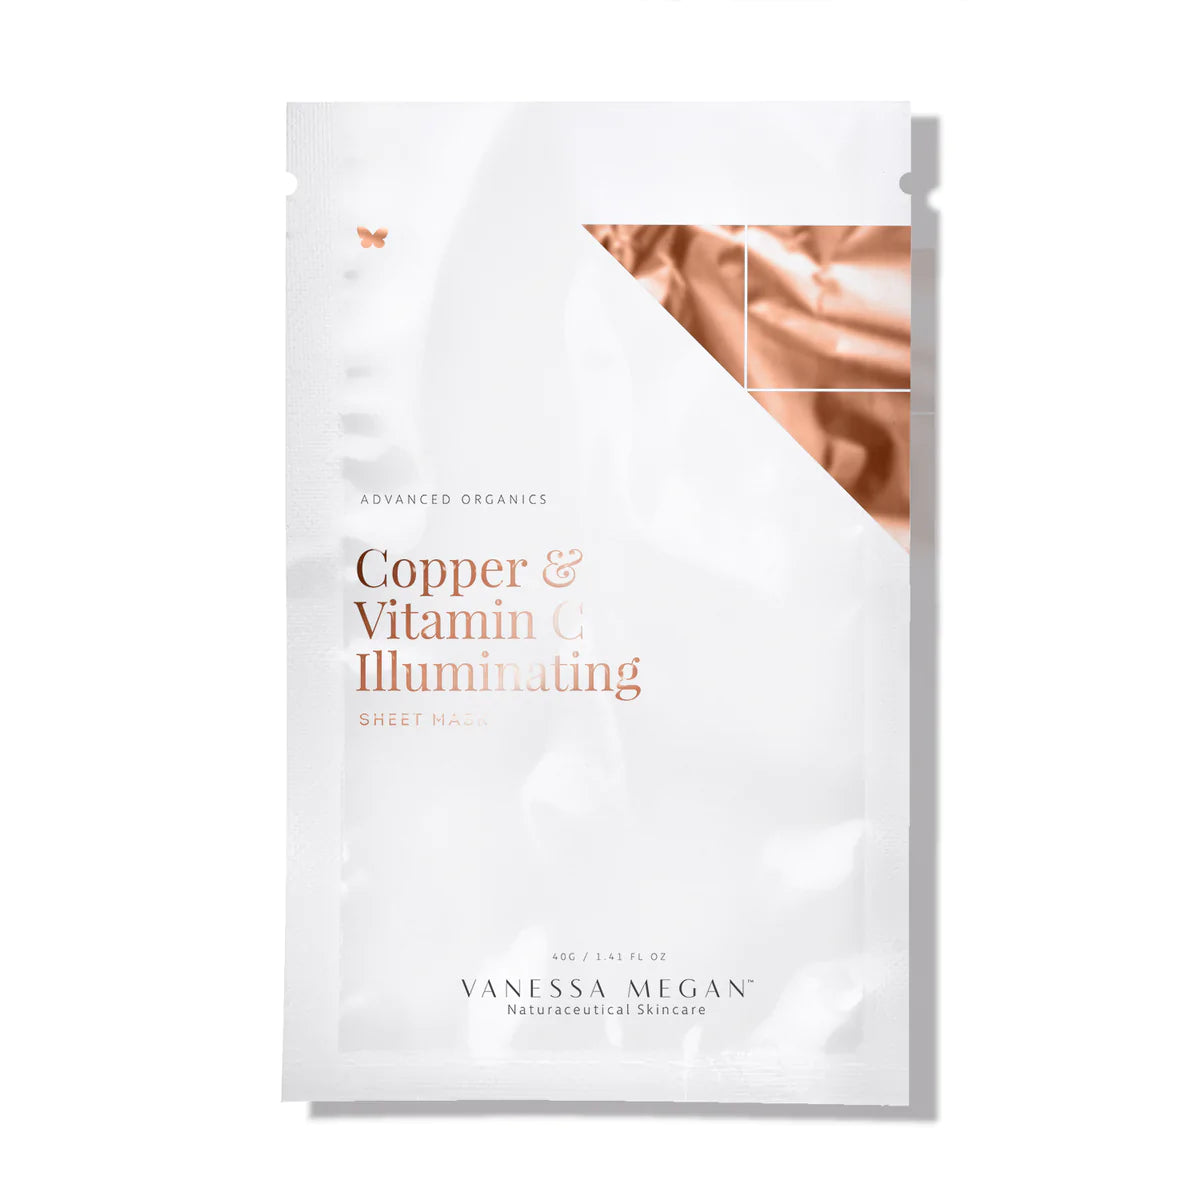 Copper & Vitamin C Illuminating Sheet Mask 銅維生素 C 亮片面膜